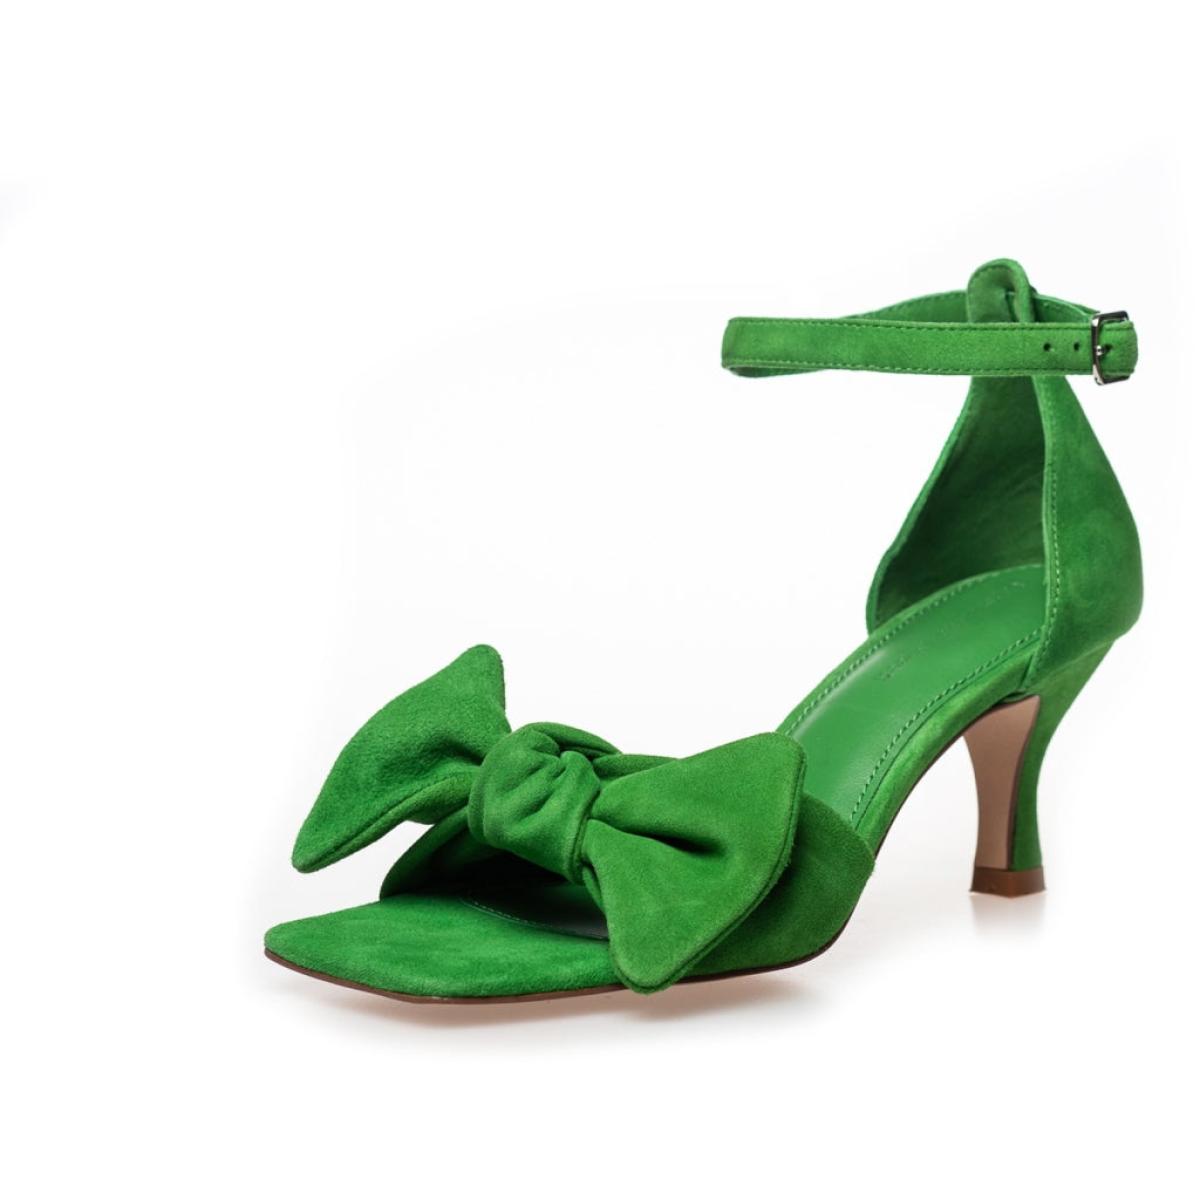 Copenhagen Shoes Dancing 23 Suede - New Green (Parrot Green) Sandals Women Fast - 1